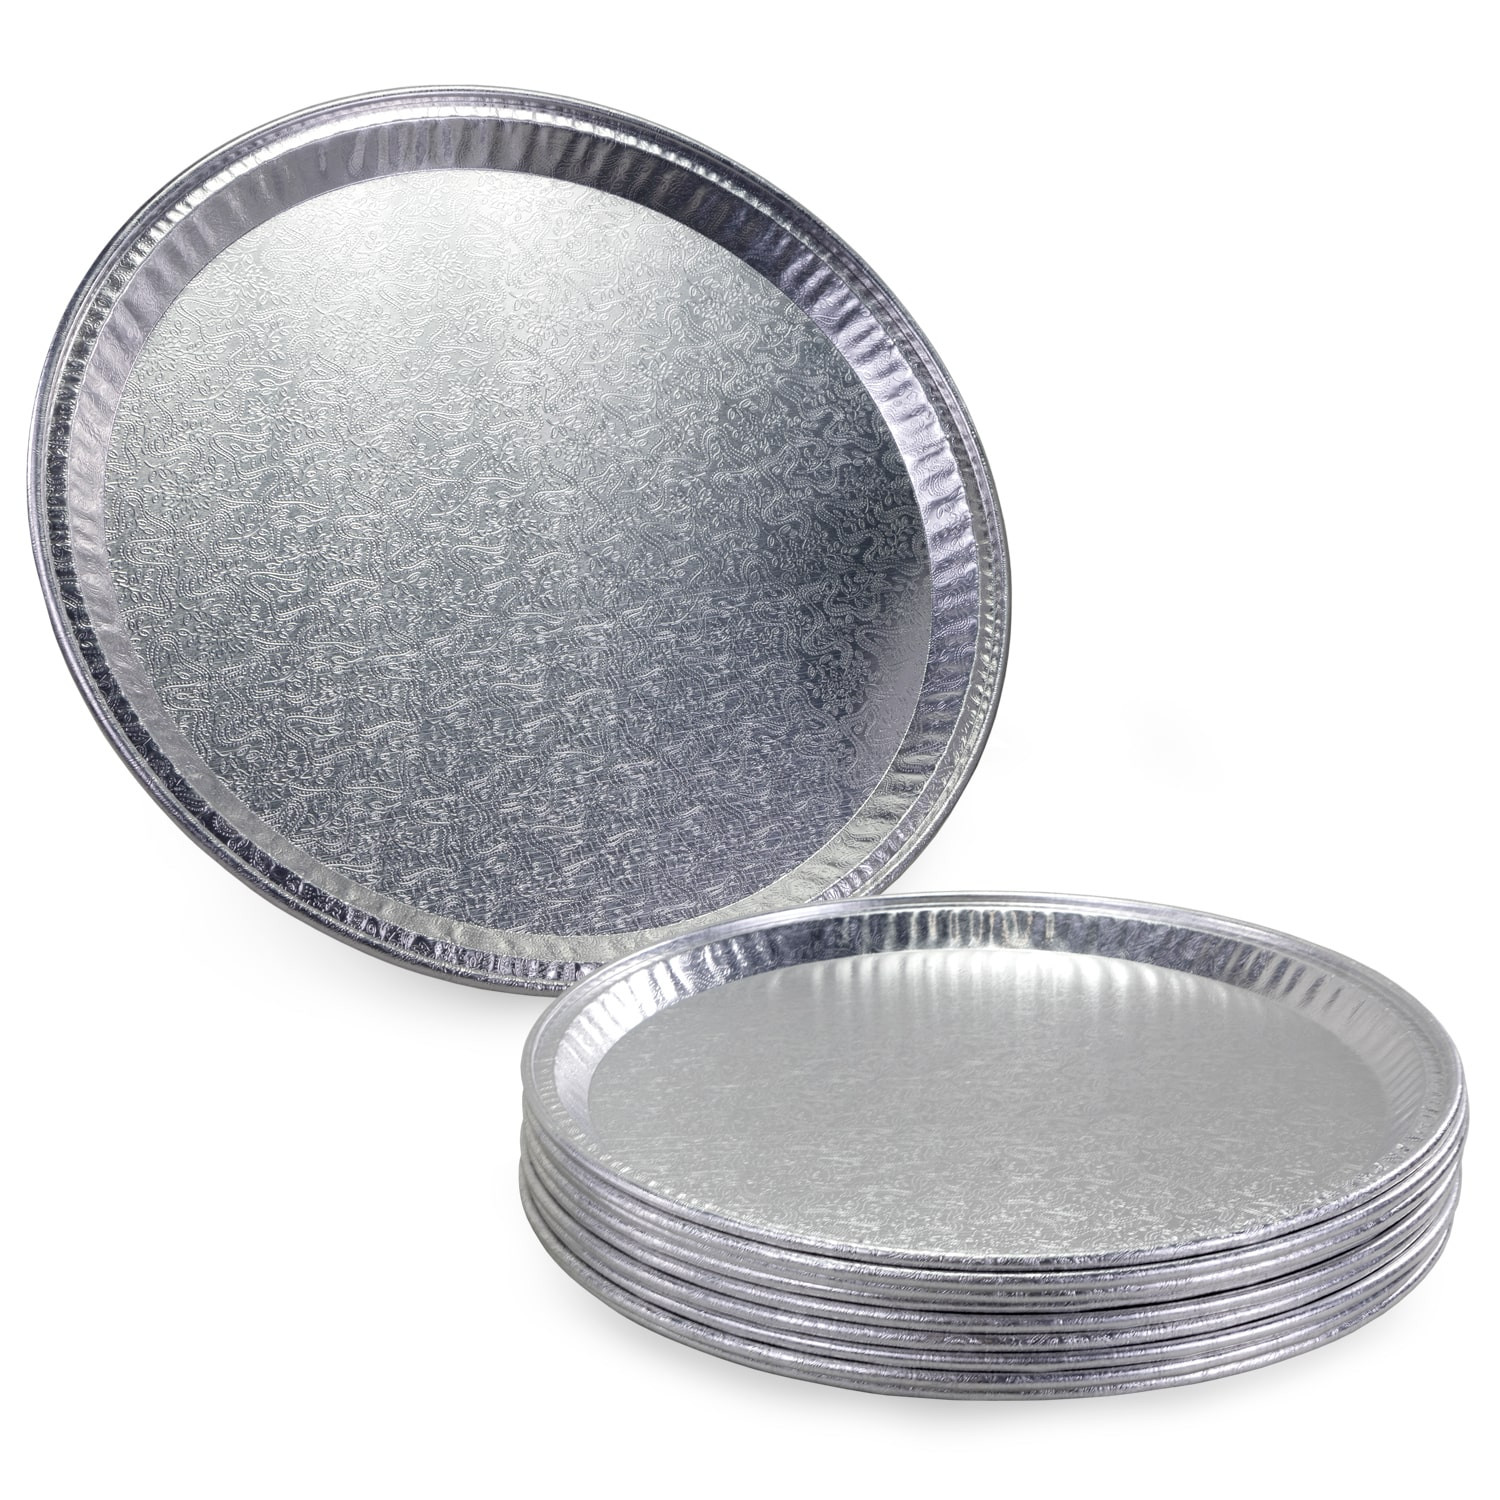 13 x 9 x 1.5 4 lb.Oblong Aluminum Pans buy in stock in U.S. in IDL  Packaging